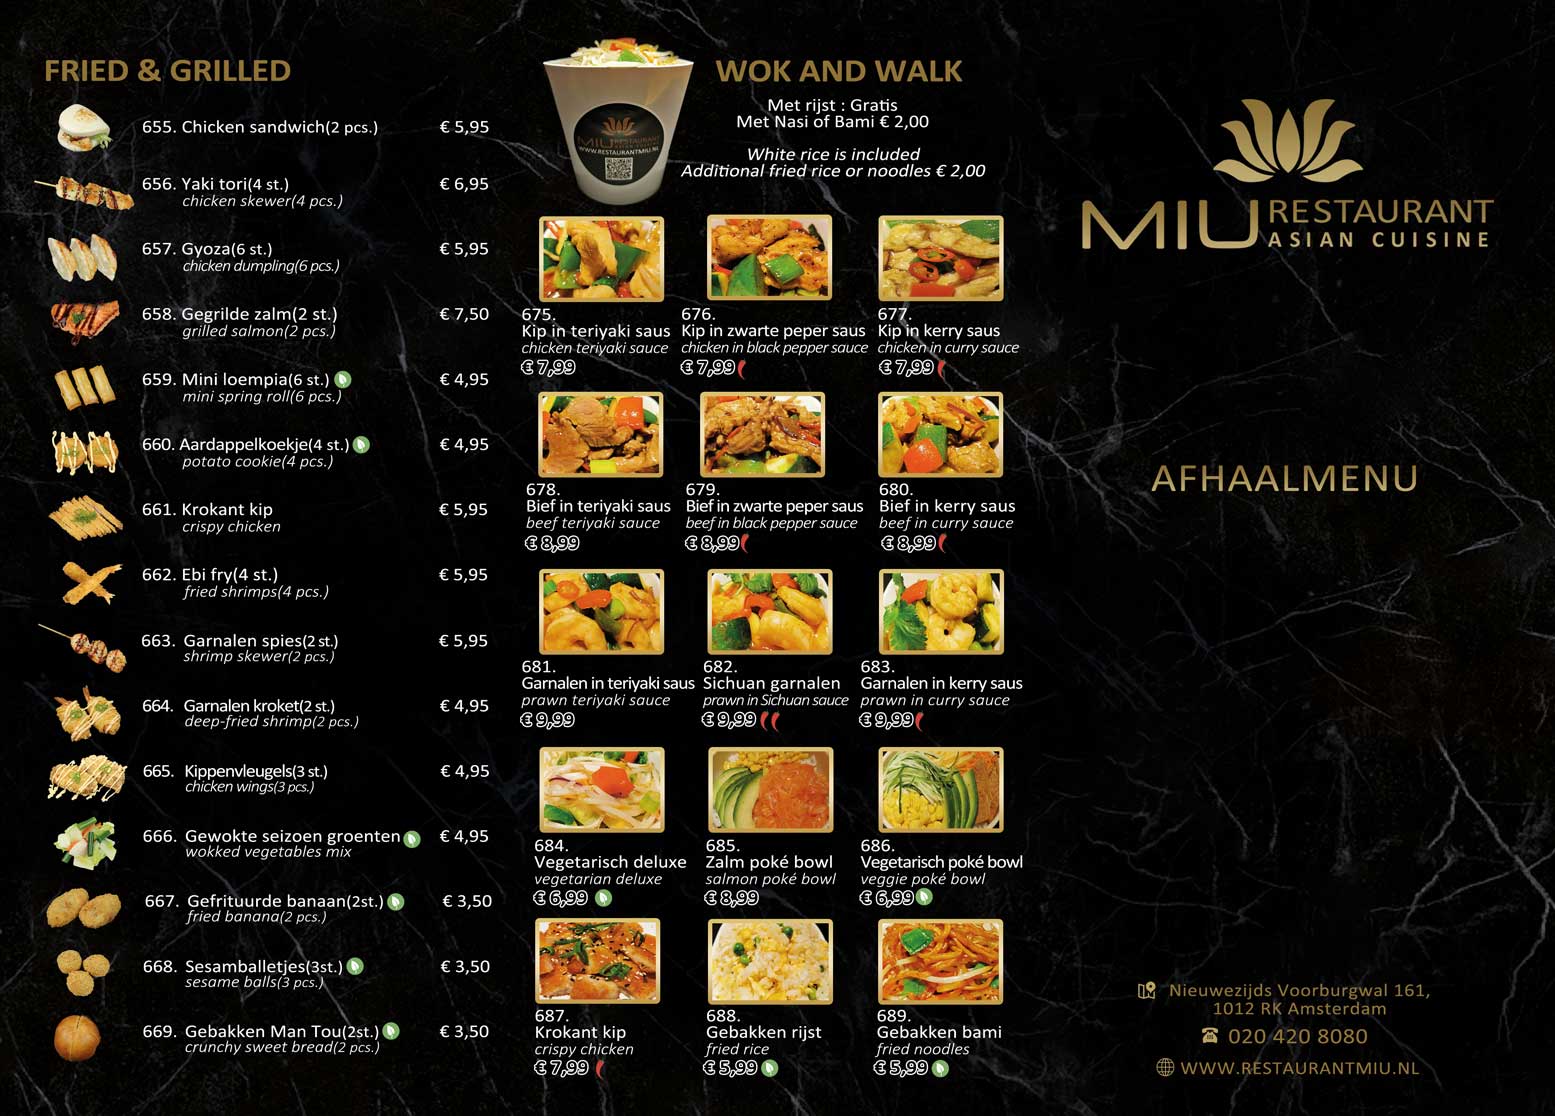 restaurant-miu-asian-cuisine-Afhaalmenukaart-vk